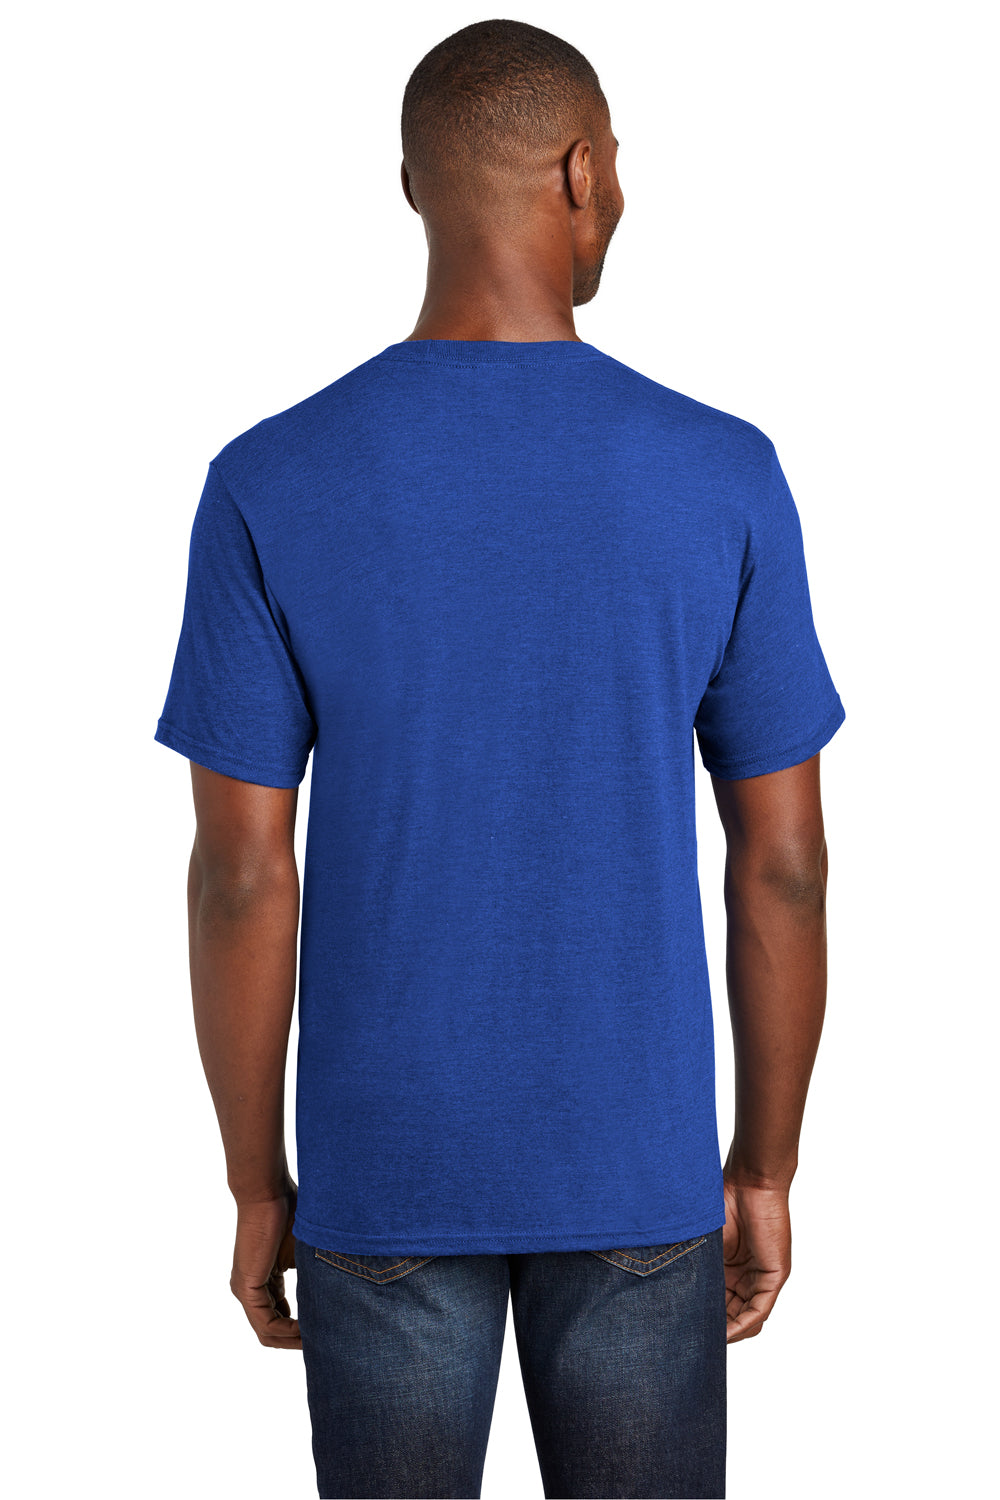 Port & Company PC455 Mens Fan Favorite Short Sleeve Crewneck T-Shirt Heather Royal Blue Back